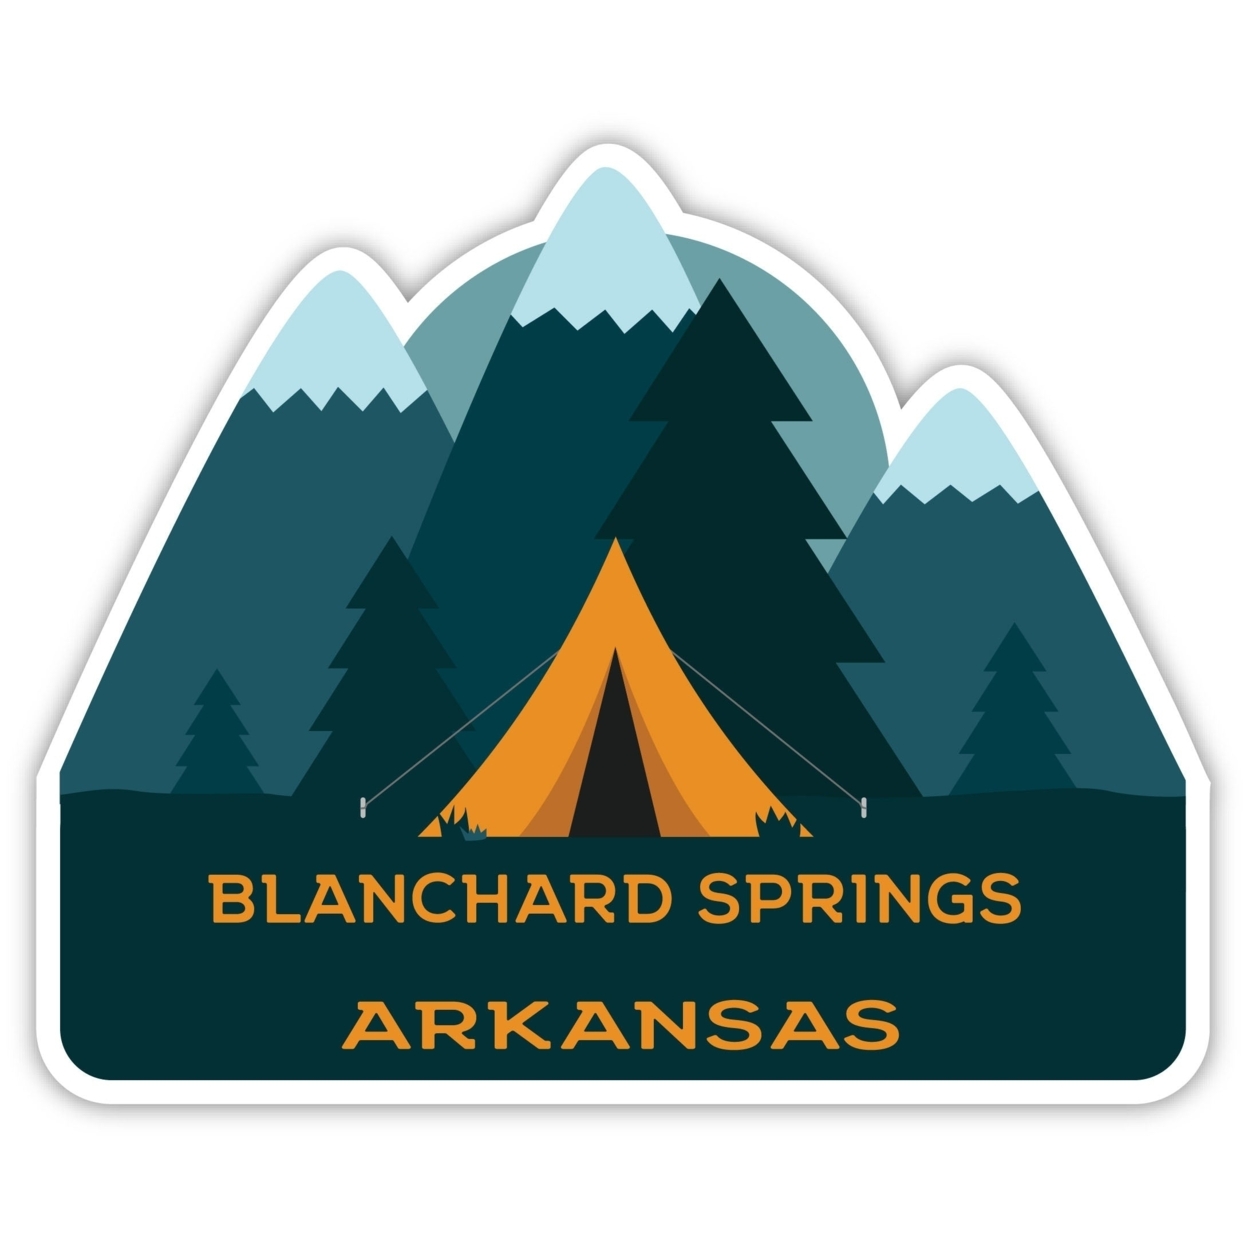 Blanchard Springs Arkansas Souvenir Decorative Stickers (Choose Theme And Size) - Single Unit, 8-Inch, Adventures Awaits